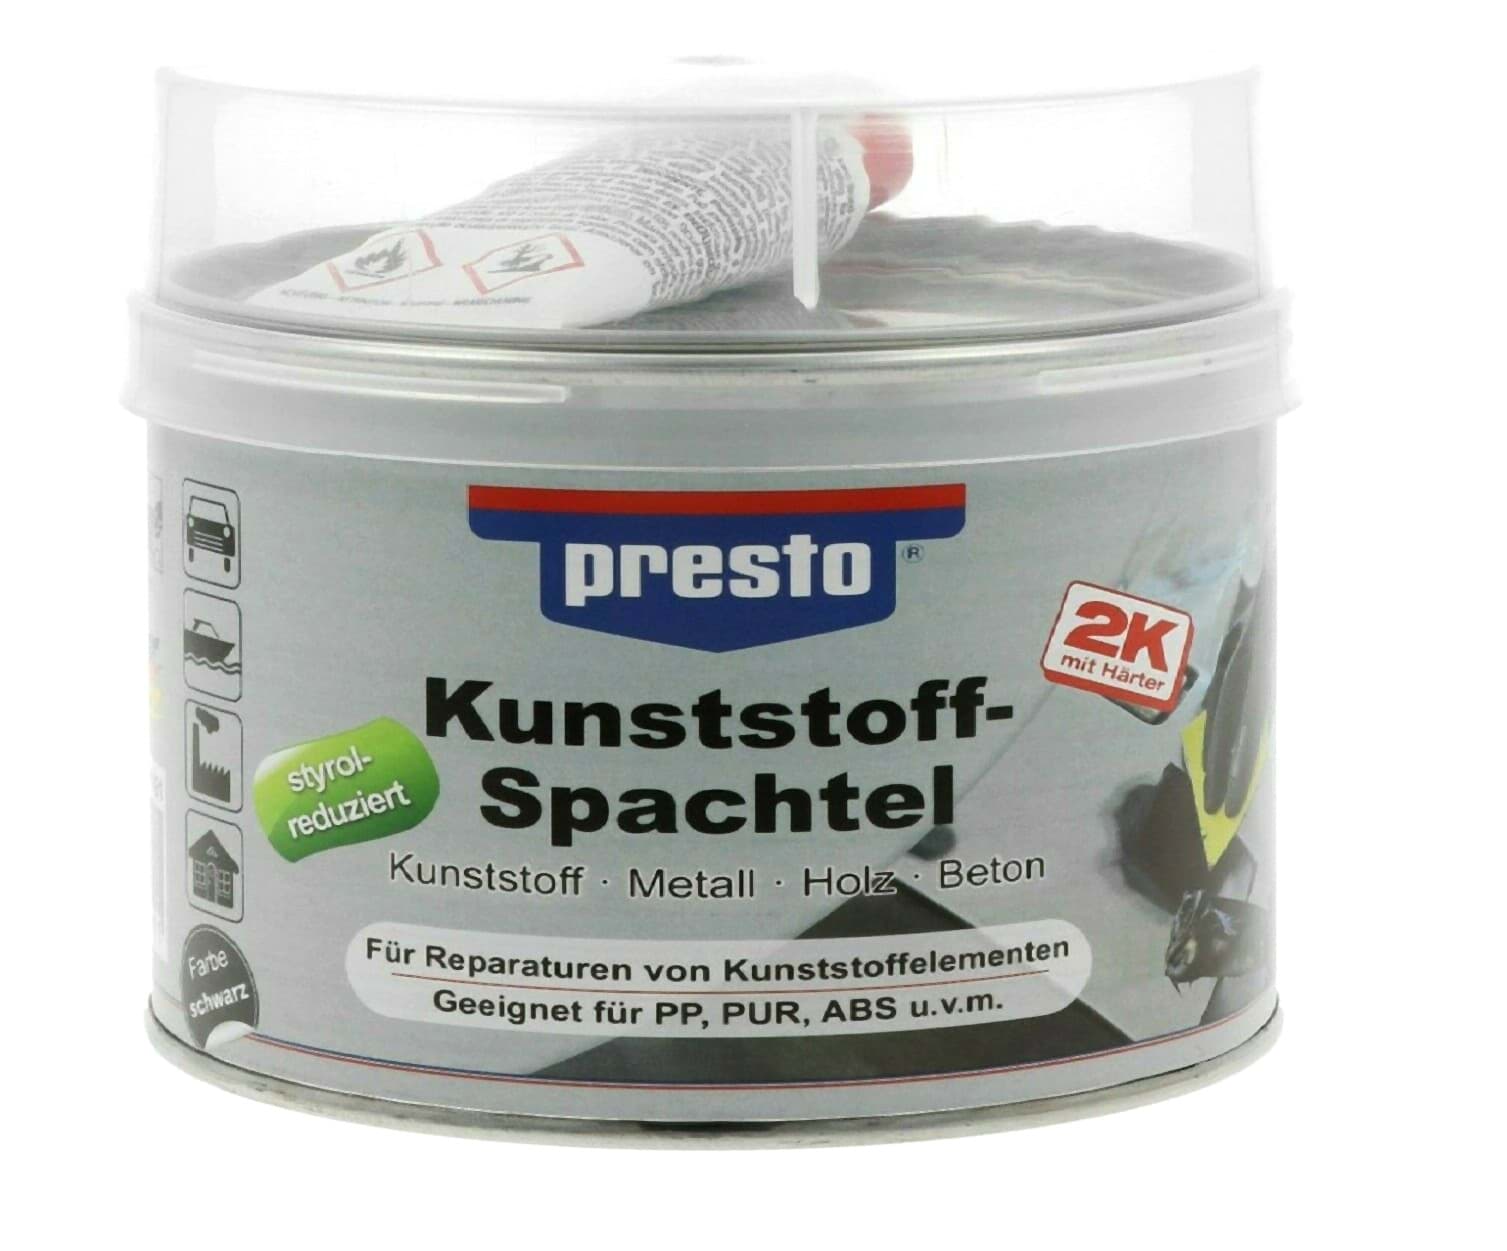 Afbeelding van Presto Kunststoffspachtel Kunststoff Spachtel Prestolith elastic 1kg